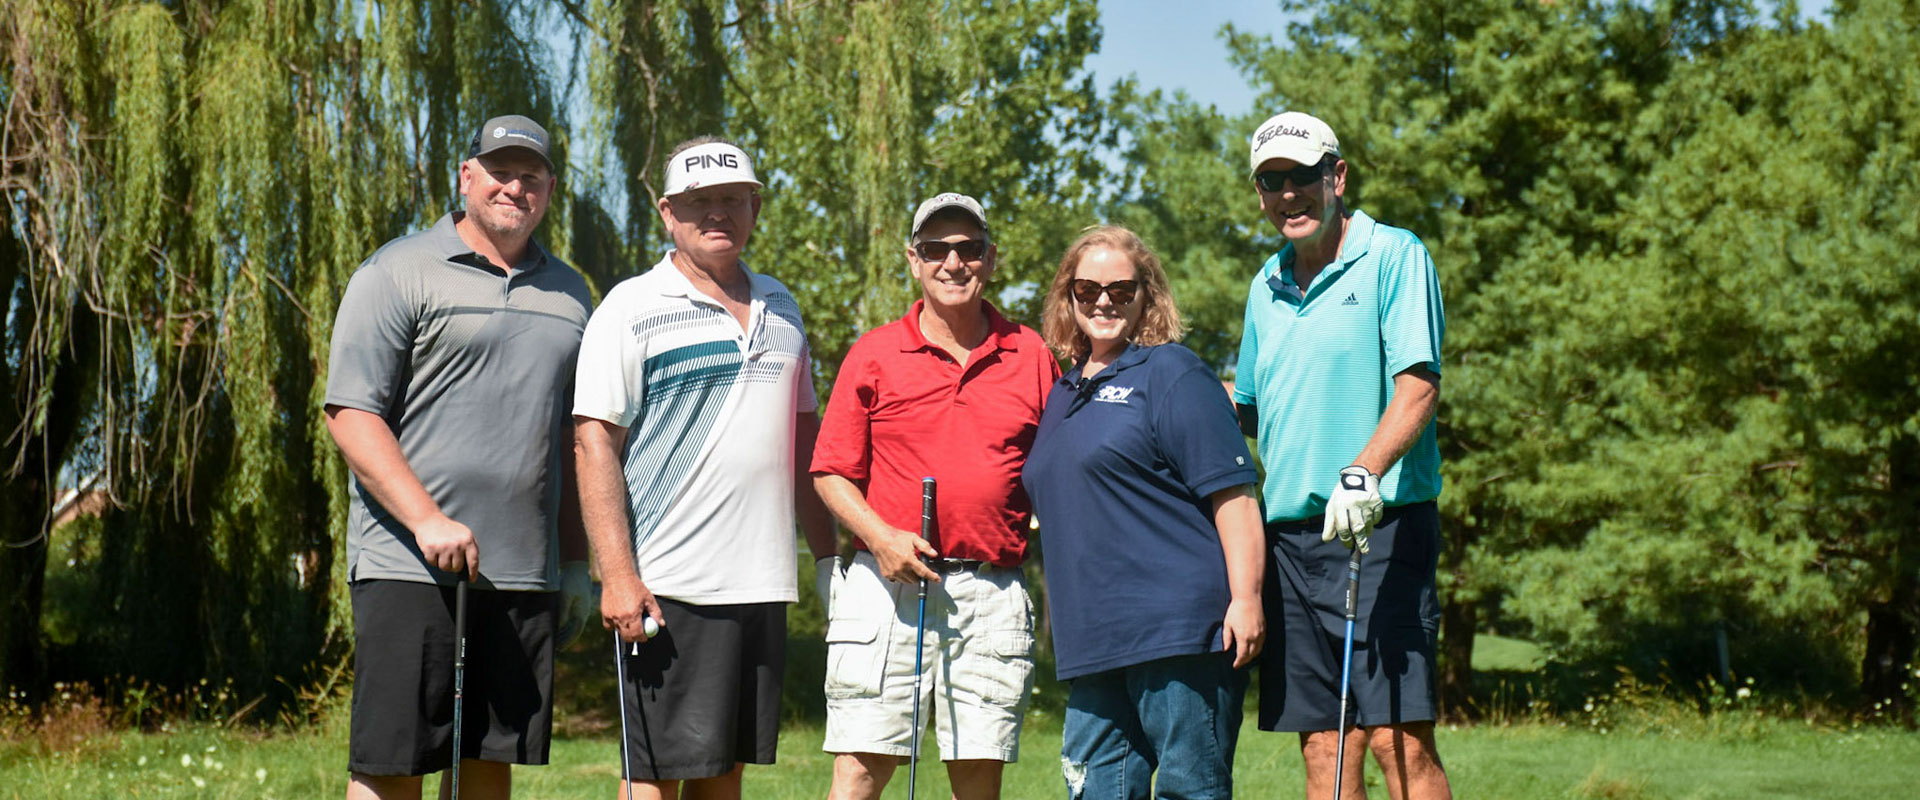 Inaugural TD SYNNEX Share the Magic Illinois Golf Tournament raises more than $118,000